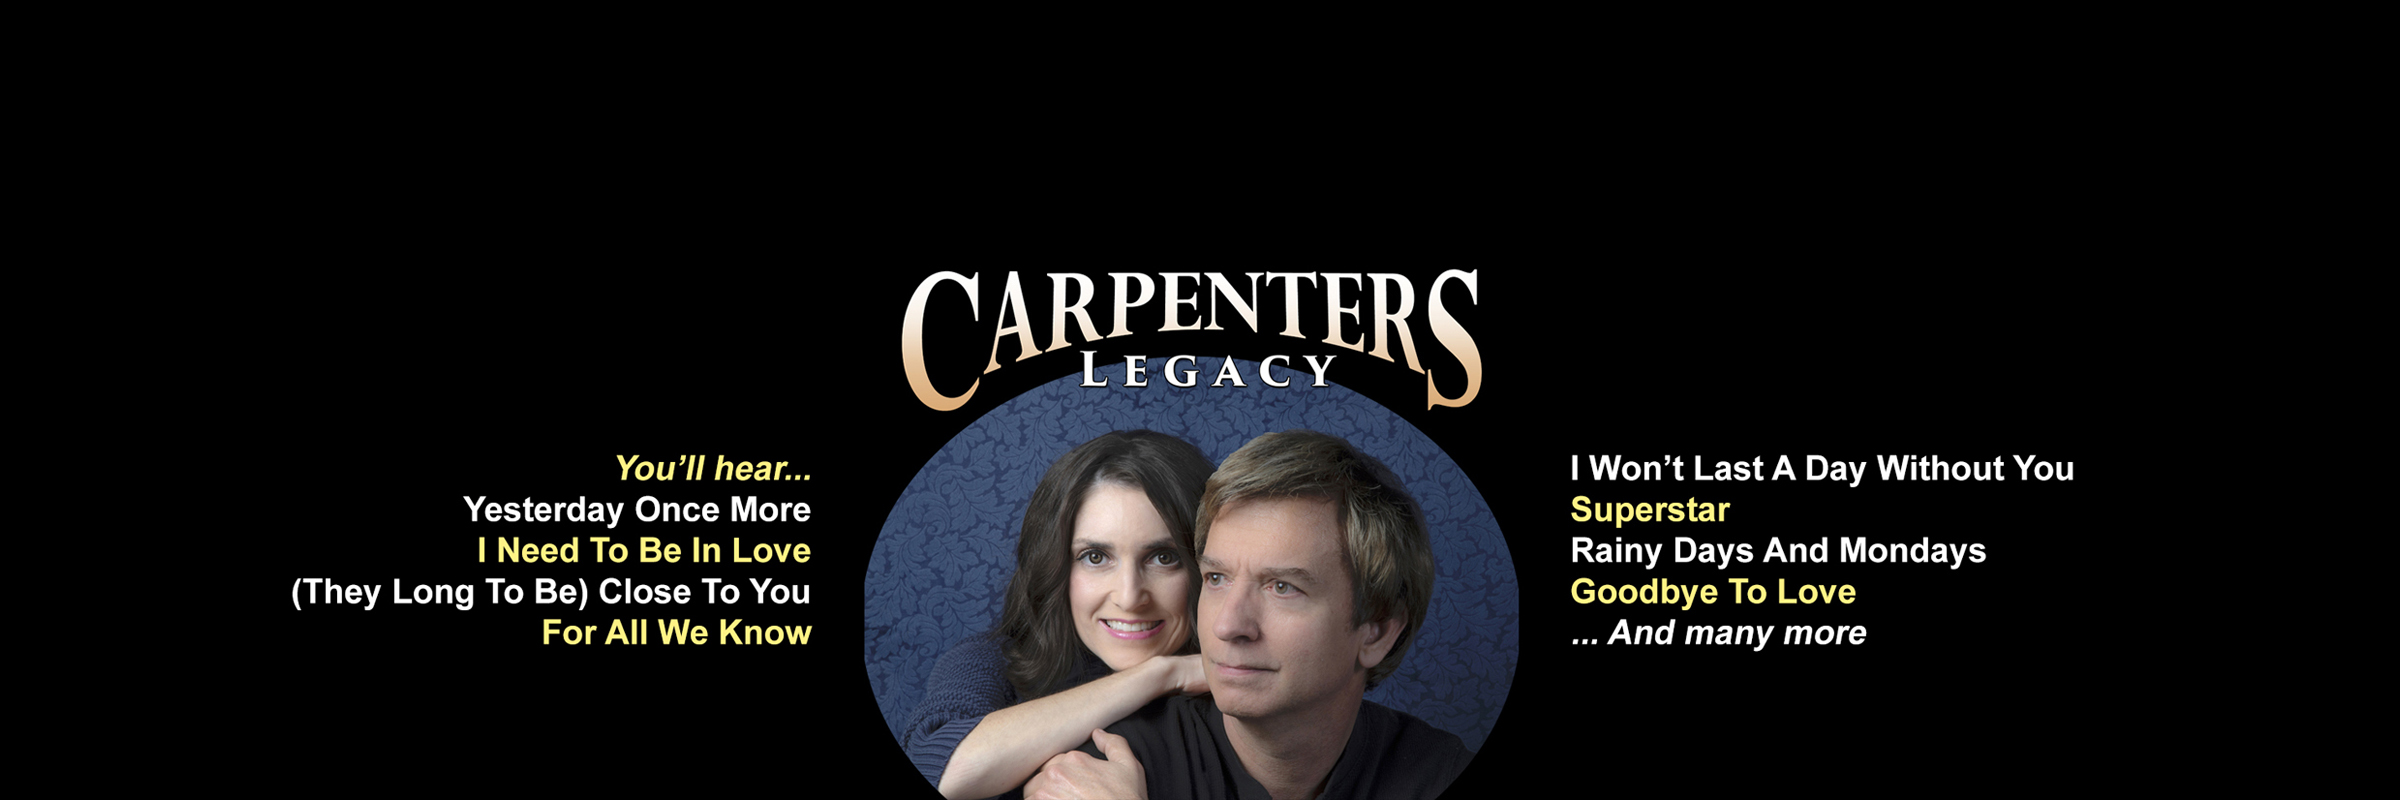 Carpenters Legacy